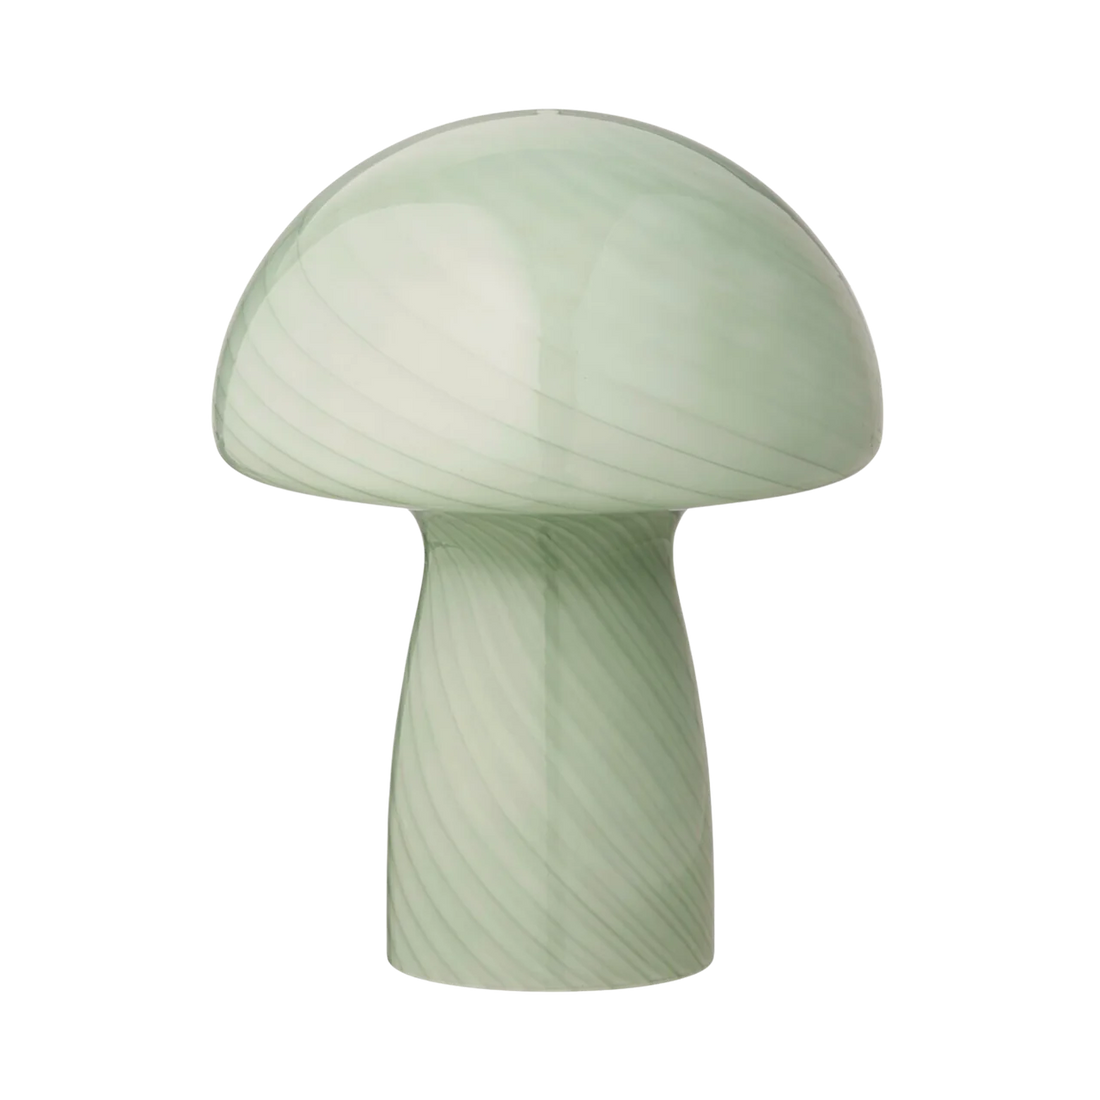 Bahne - sienilamppu / sienpöytävalaisin, minttu - H23 cm.